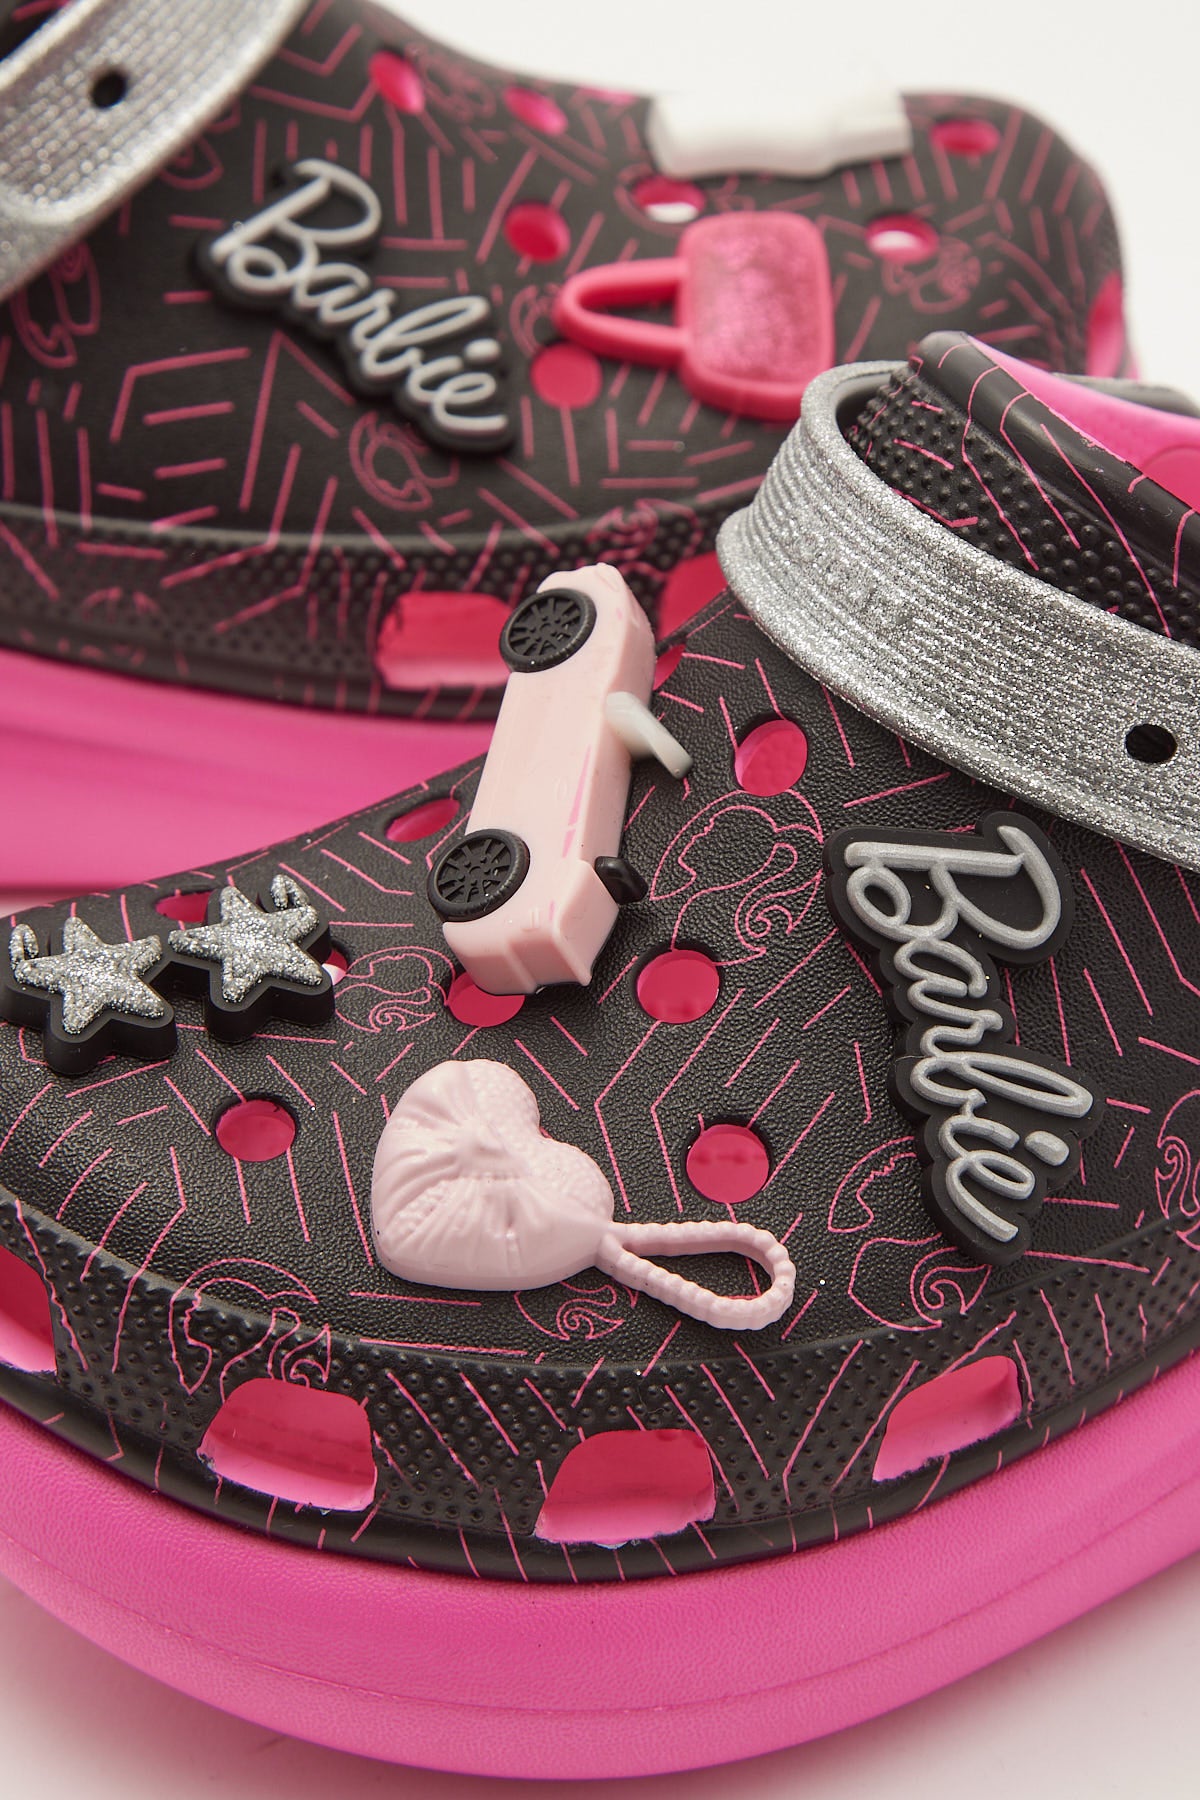 Barbie™ x Crocs Classic Clog - Electric Pink